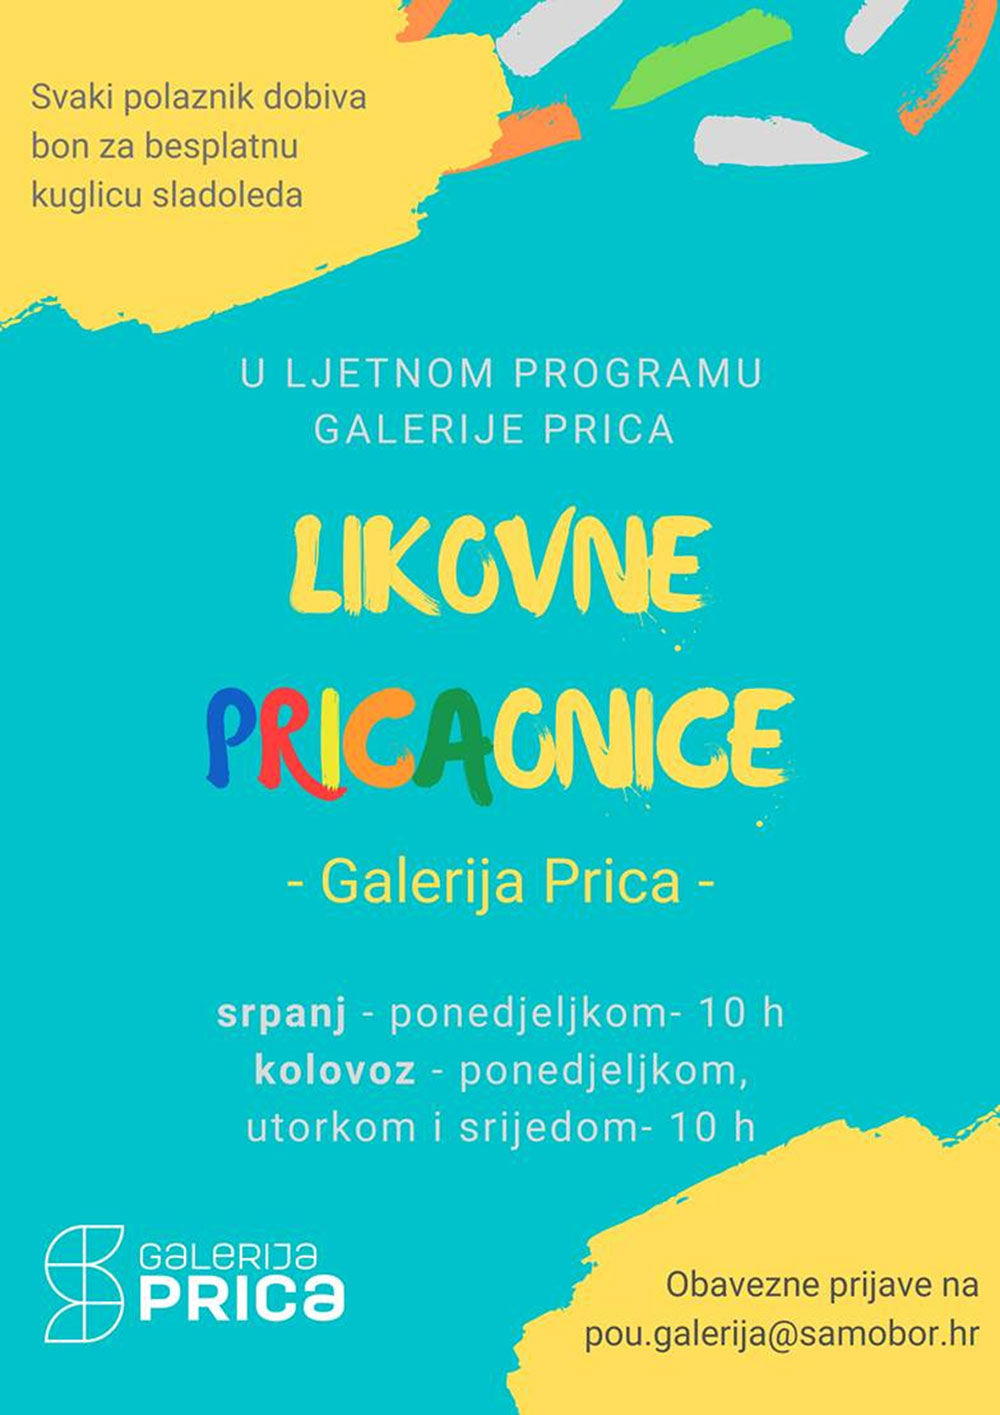 Likovne PRICAonice - edukativne likovne radionice Galerije Prica za osnovnokolce